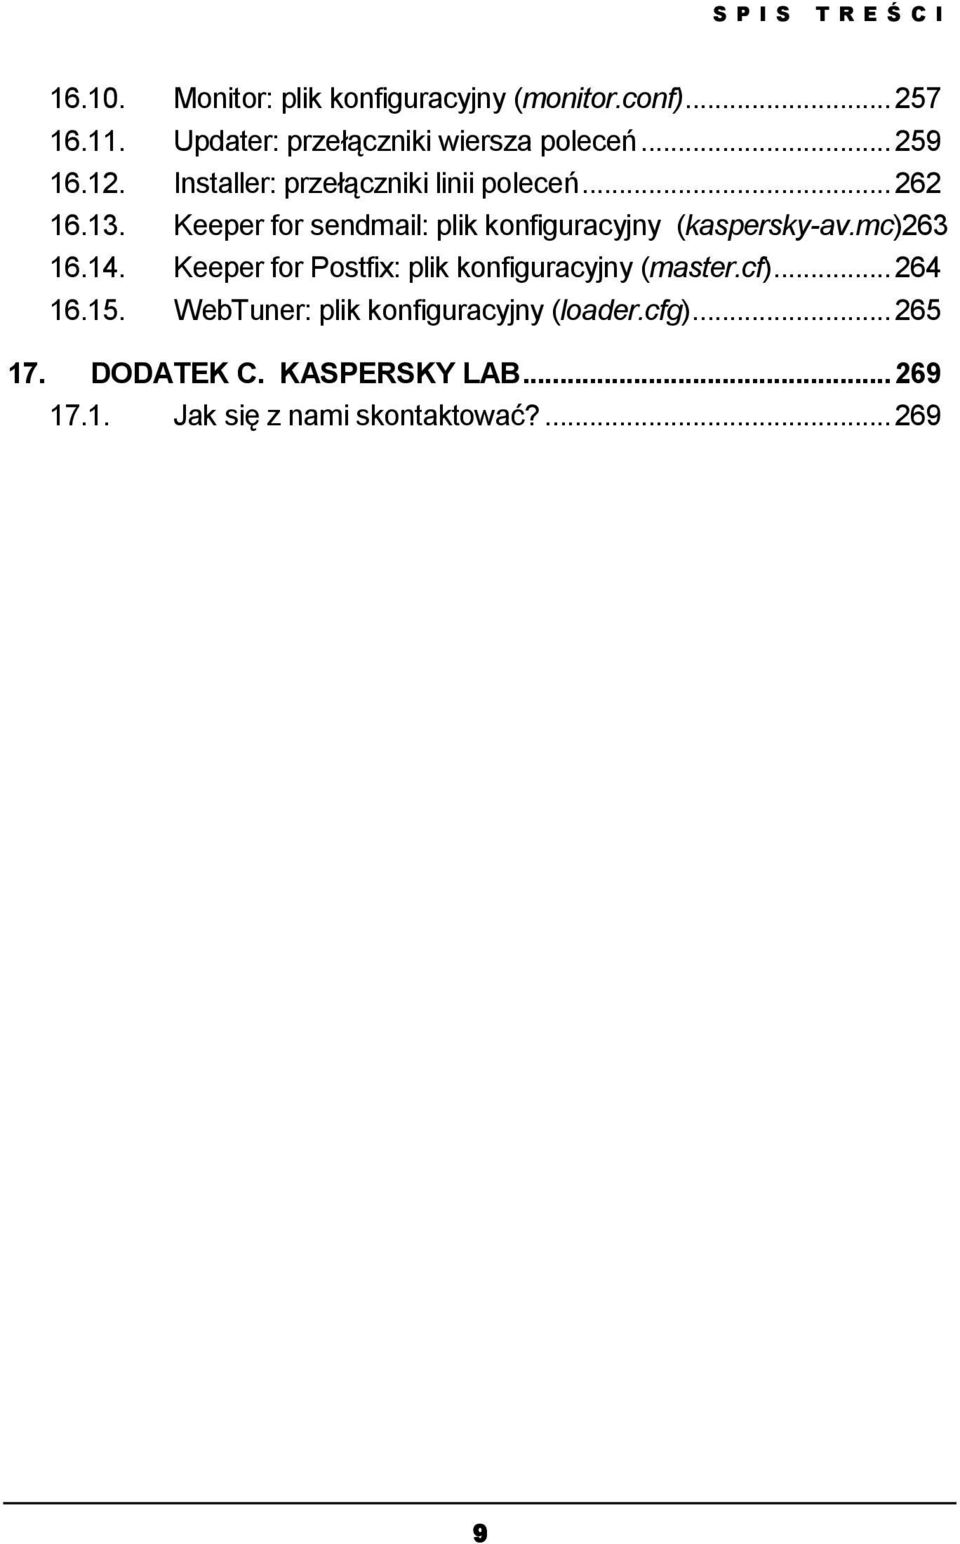 Keeper for sendmail: plik konfiguracyjny (kaspersky-av.mc)263 16.14.